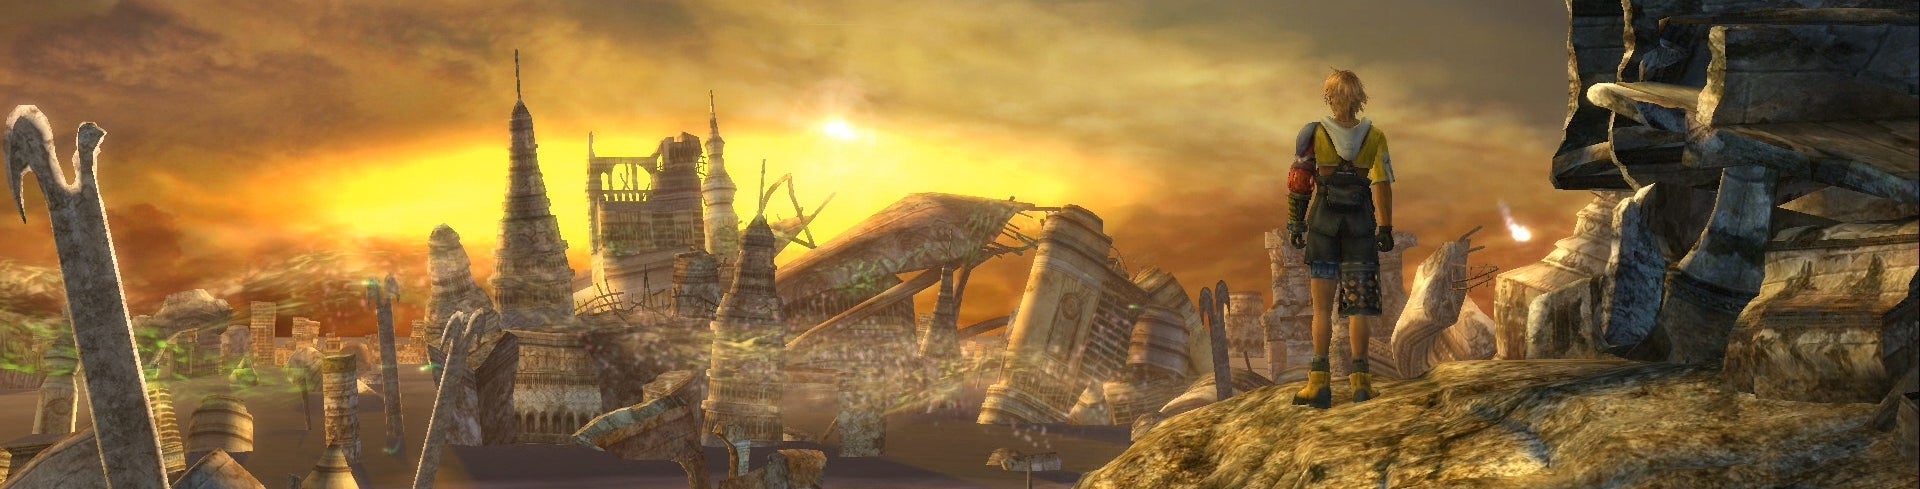 Imagen para Análisis Final Fantasy X / X-2 HD Remaster